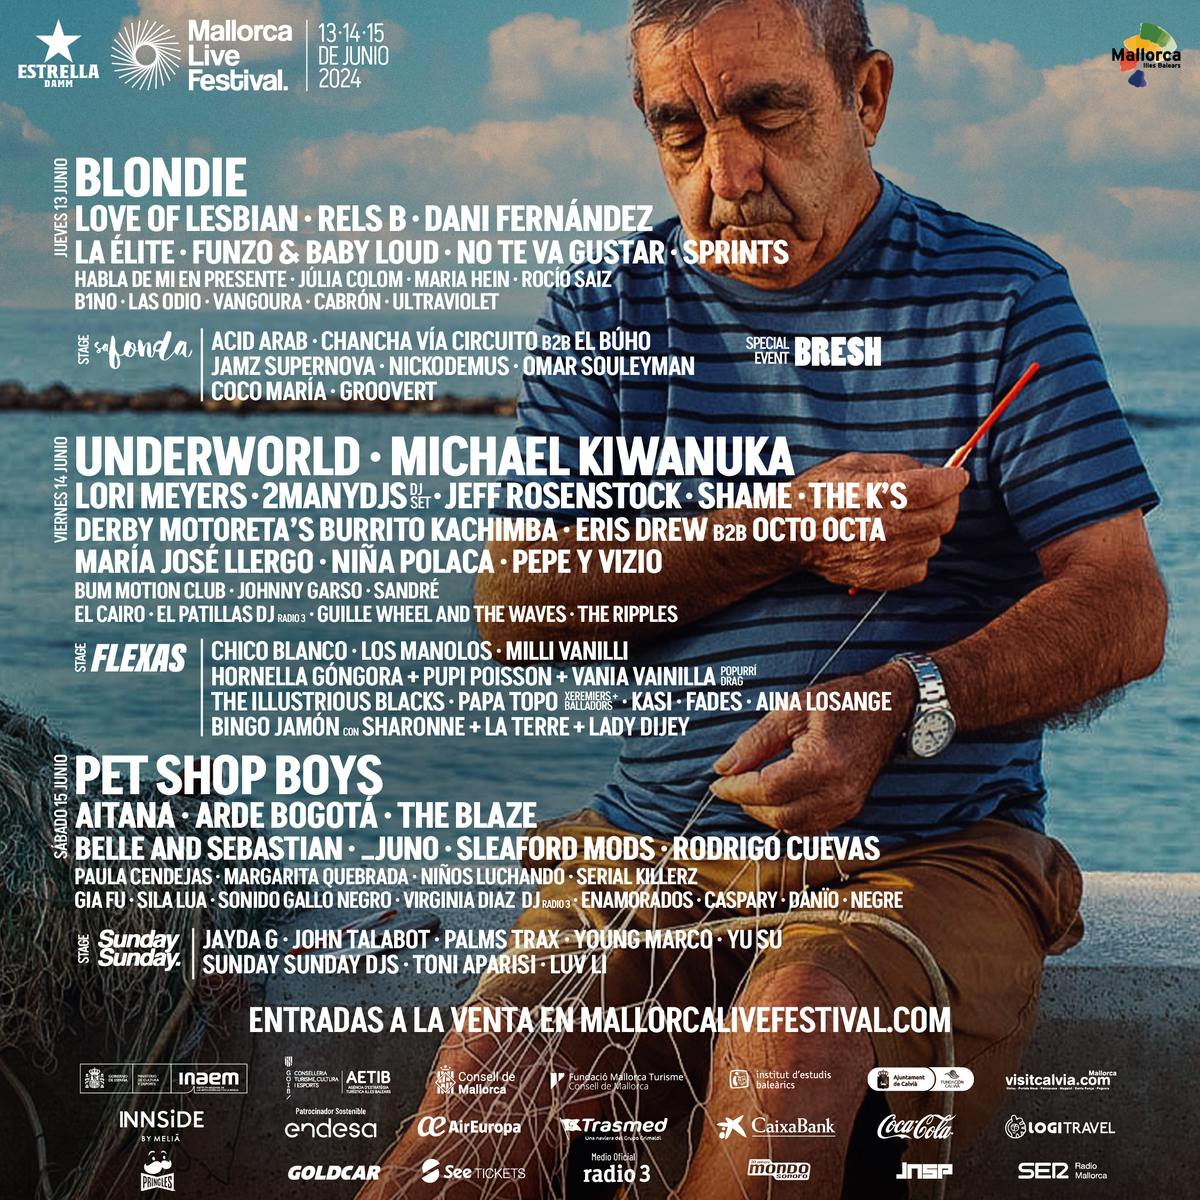 Billet 2 jours (jeudi+samedi) Mallorca Live Festival 2024